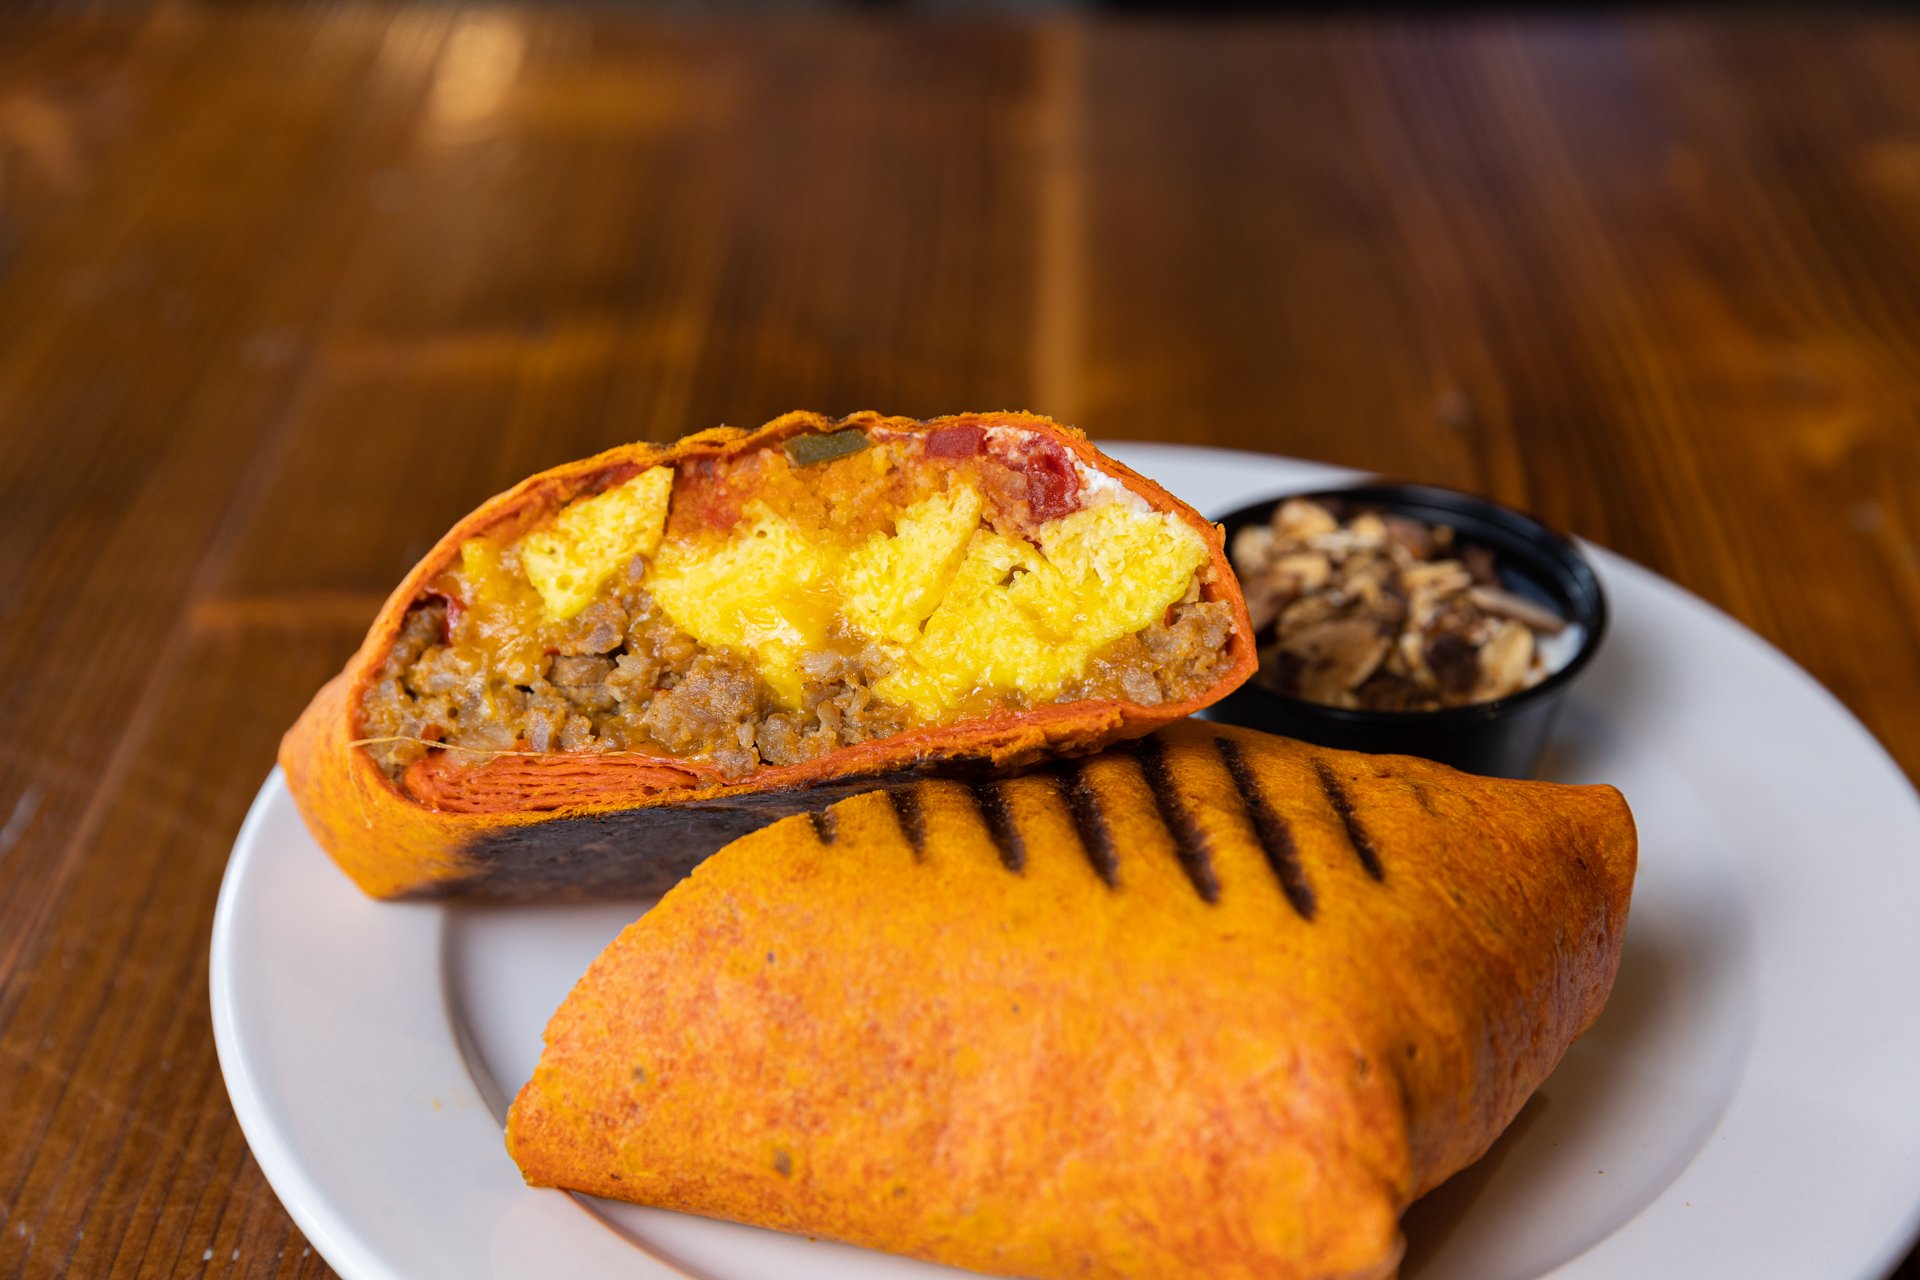 Bandito Burrito - Food - Taste Bistro & Coffee Bar - Cafe in East Aurora, NY